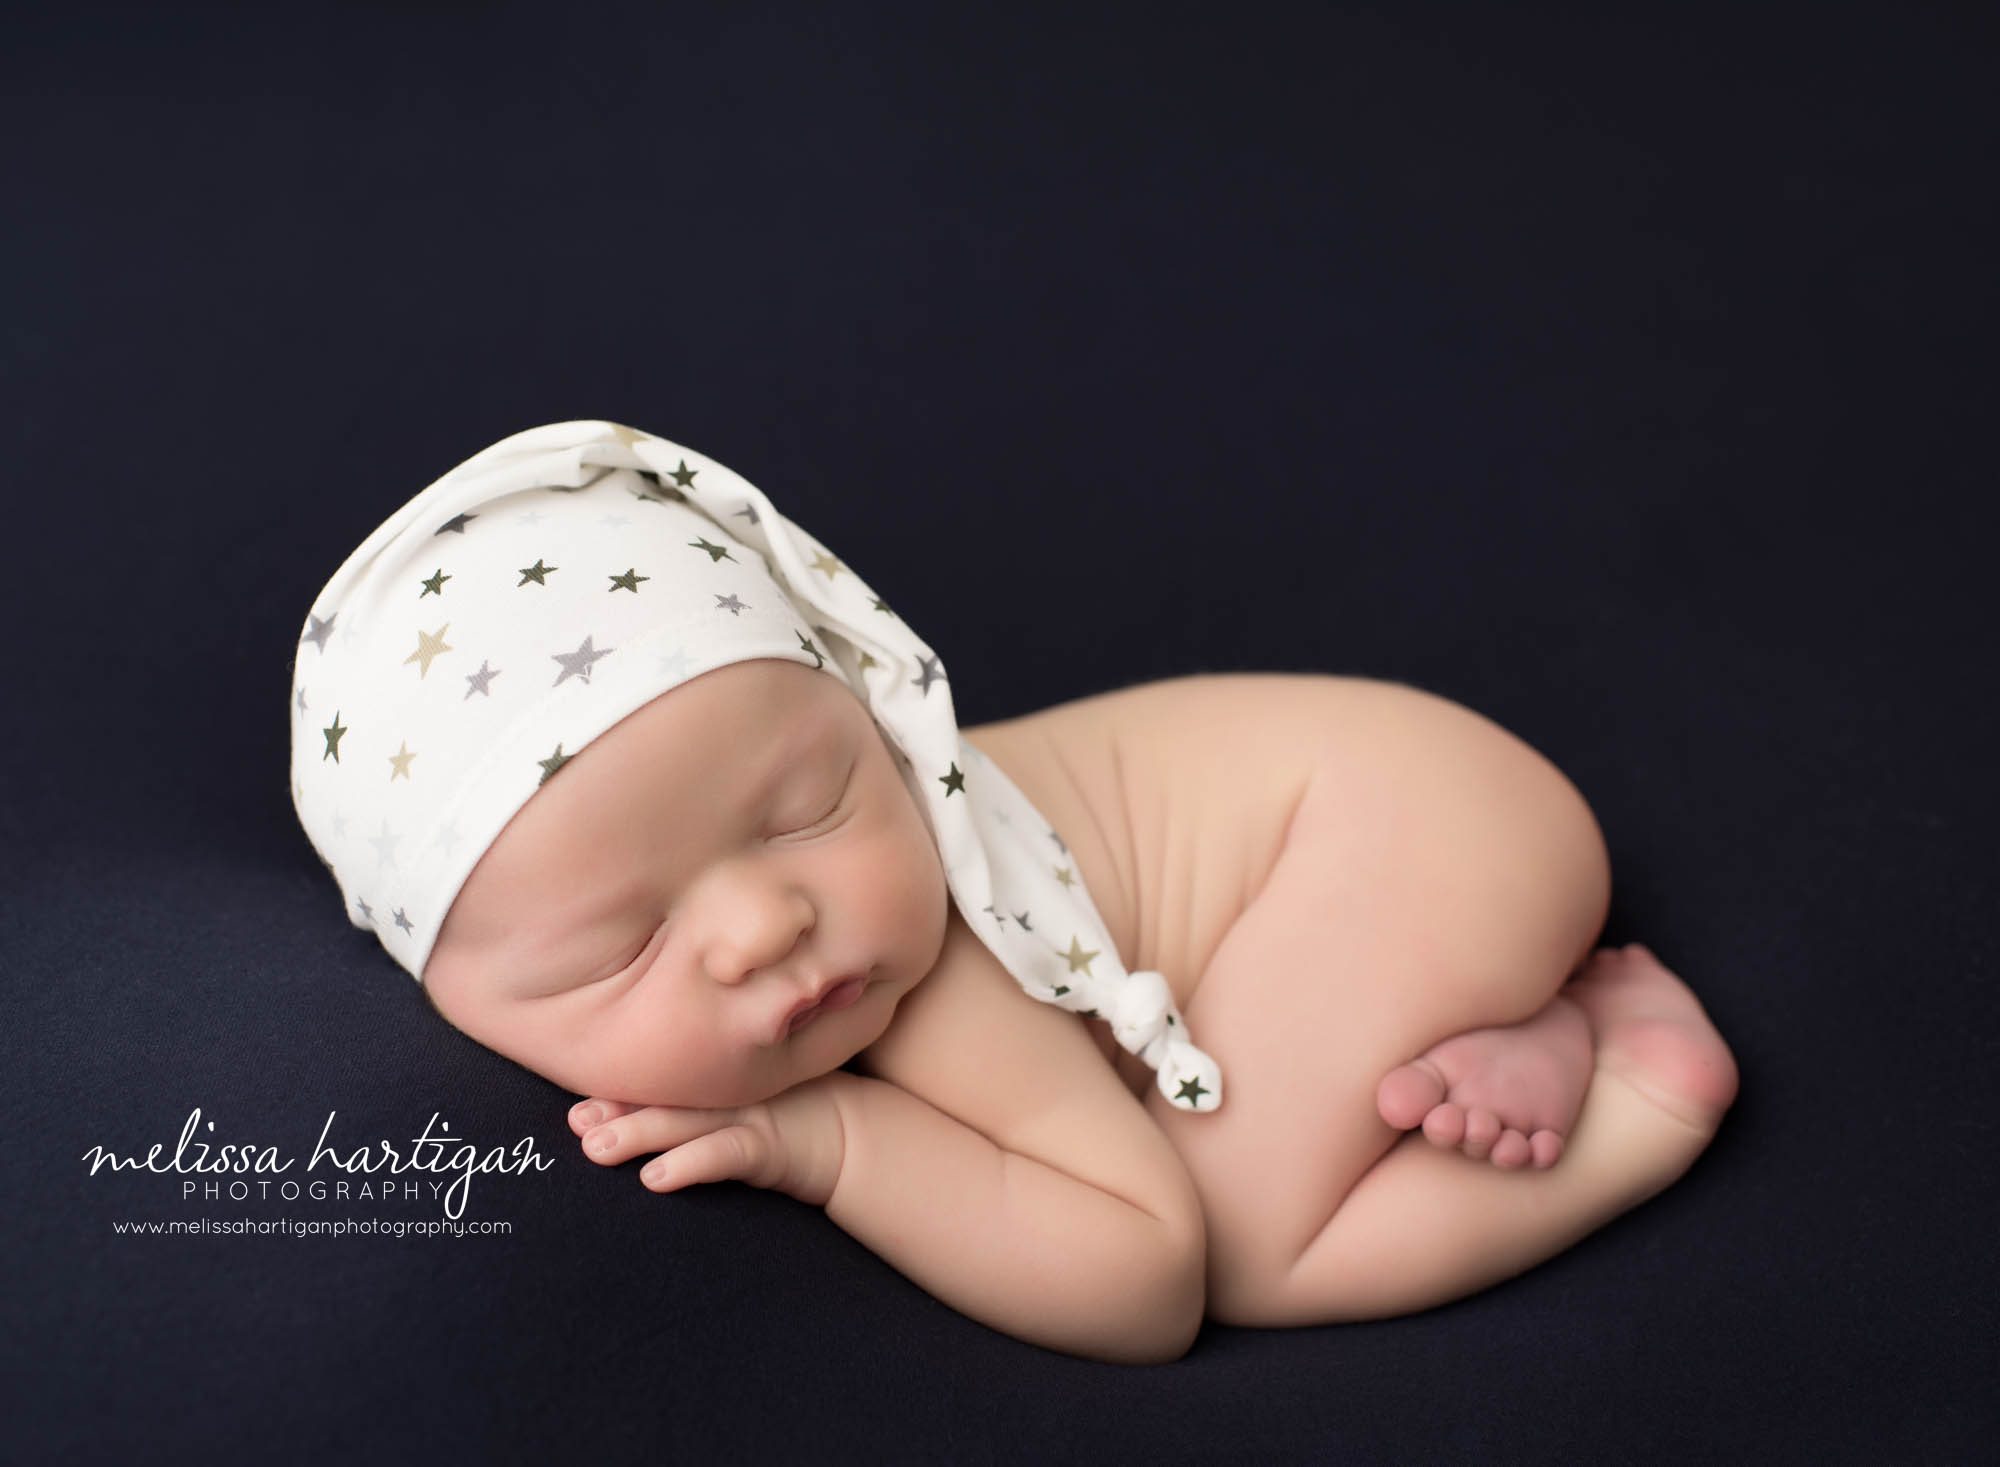 newborn baby boy posed on navy blue backdrop wearing white sleepy cap with stars